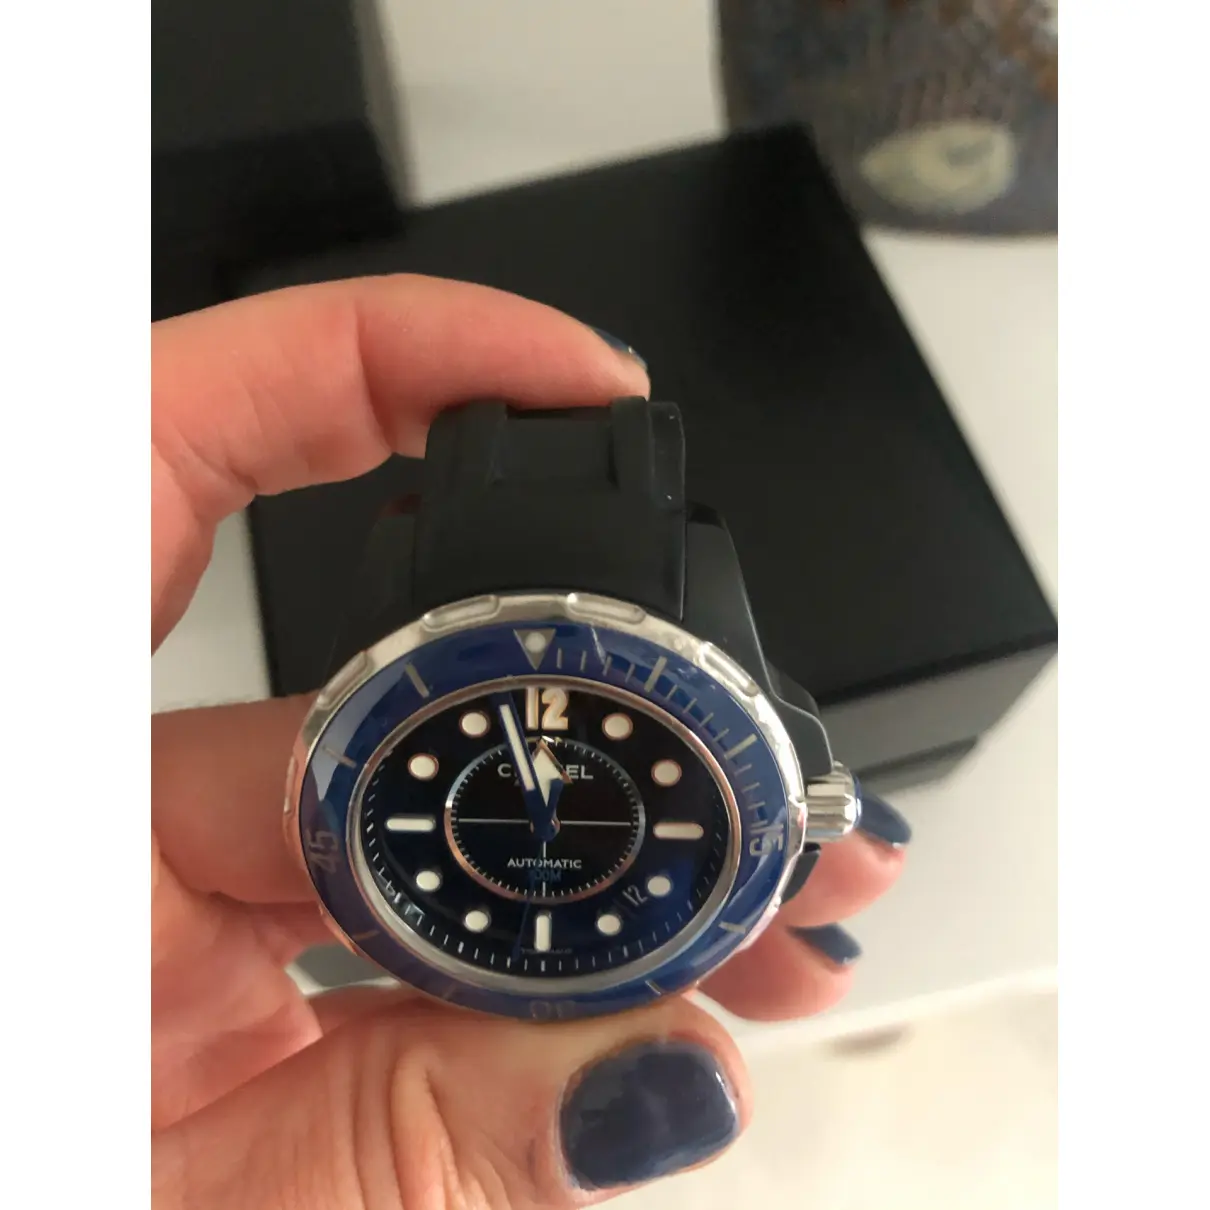 J12 Marine watch Chanel